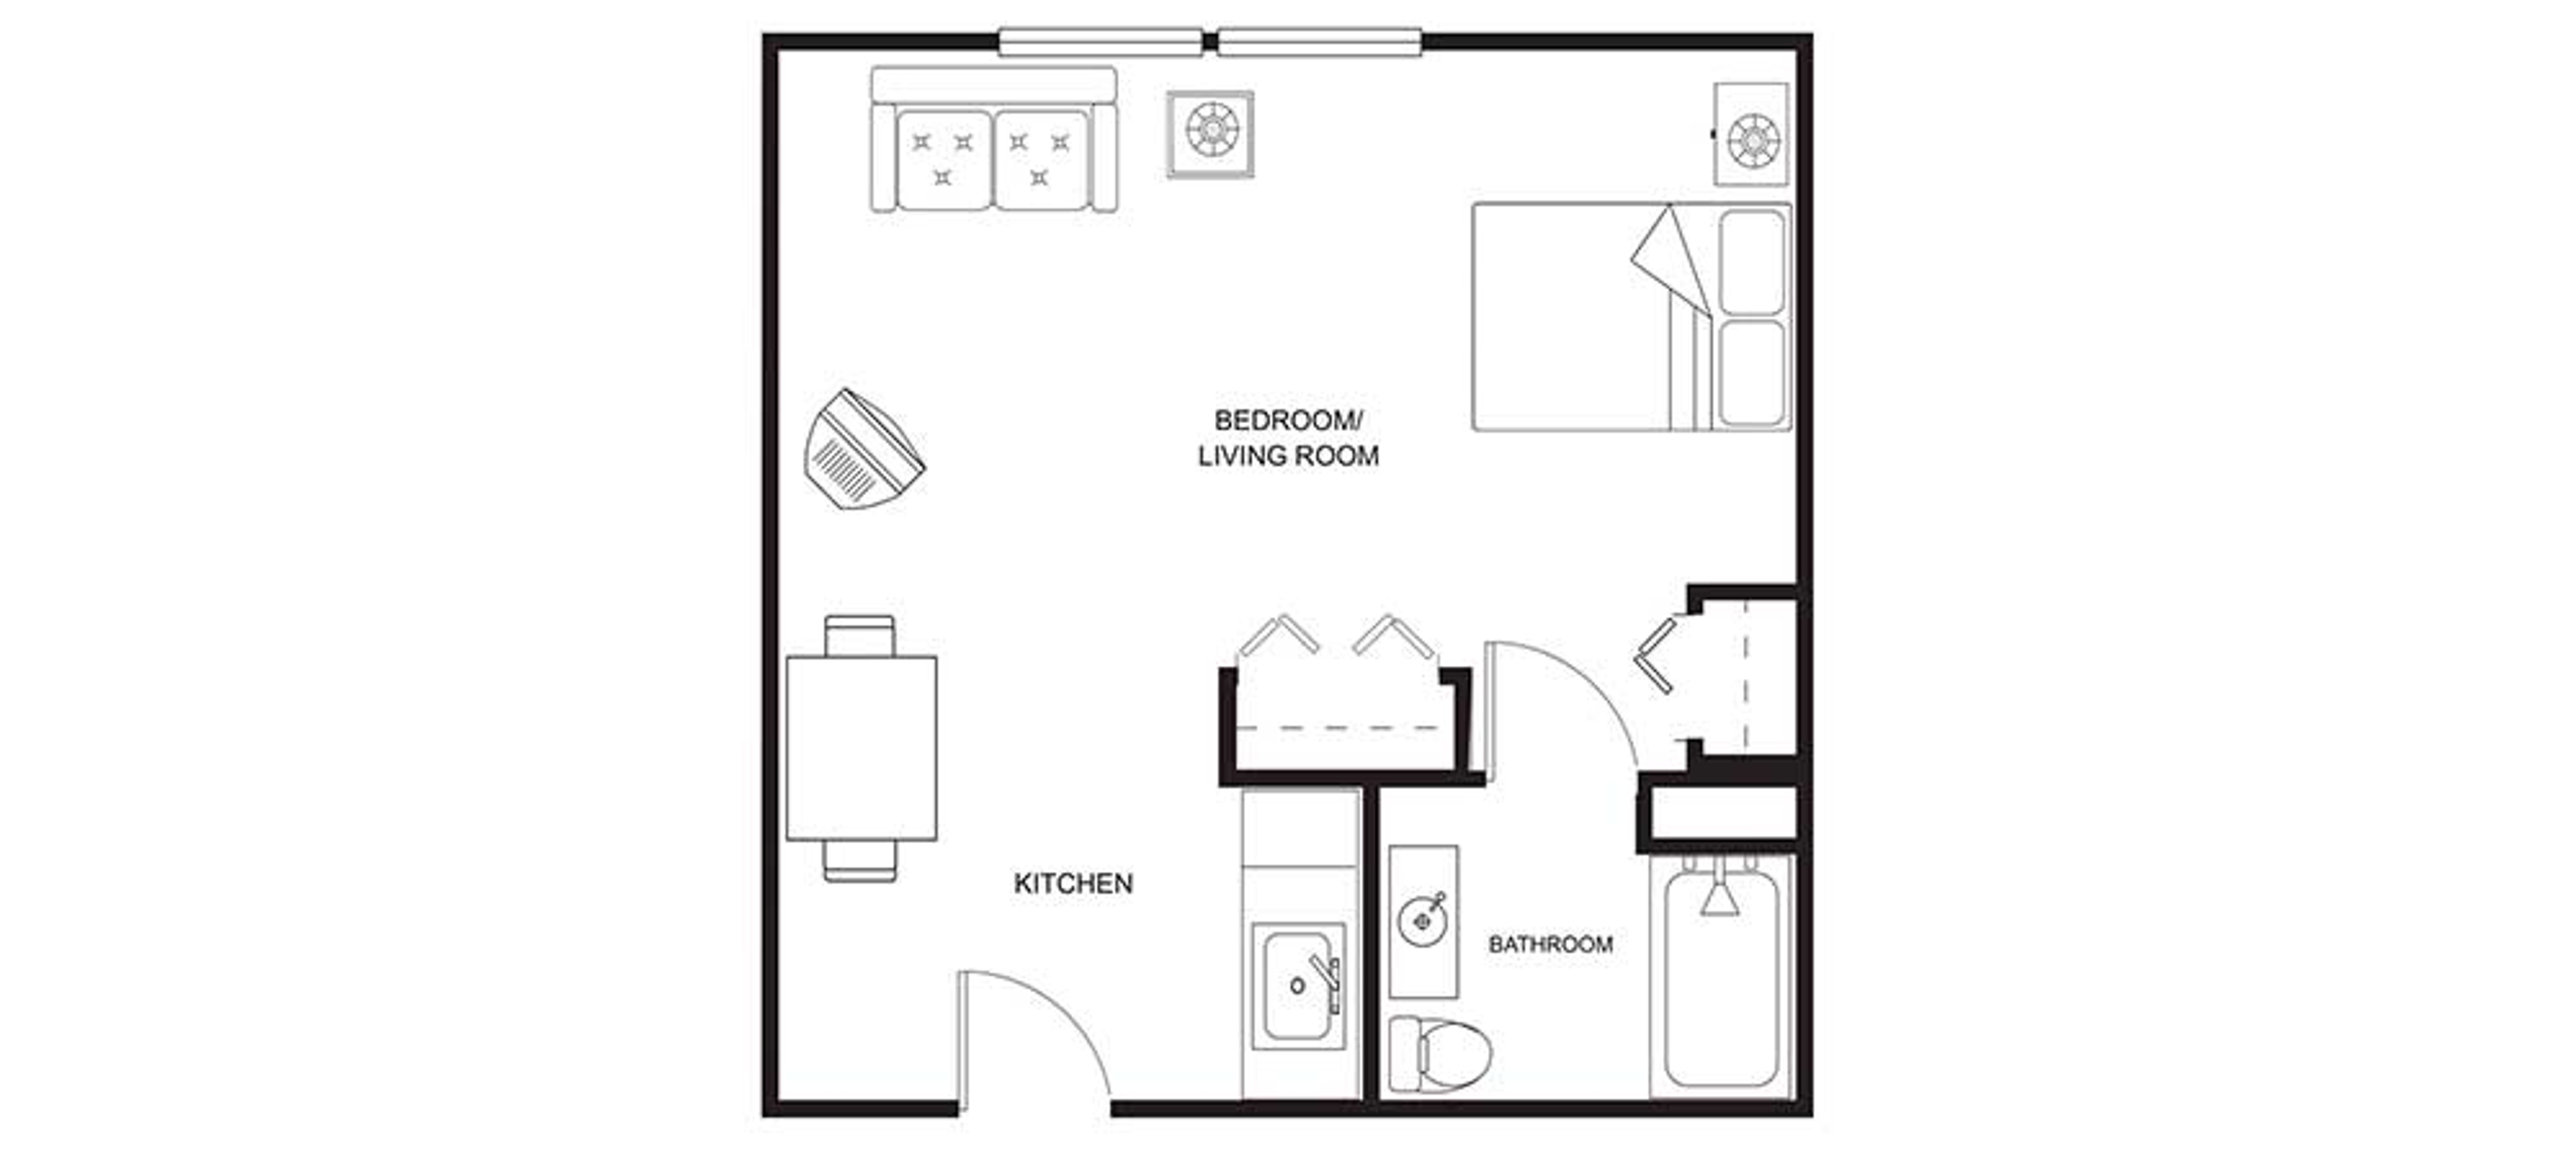 Floorplan - Bay Side Terrace - Studio S2 Assisted Living